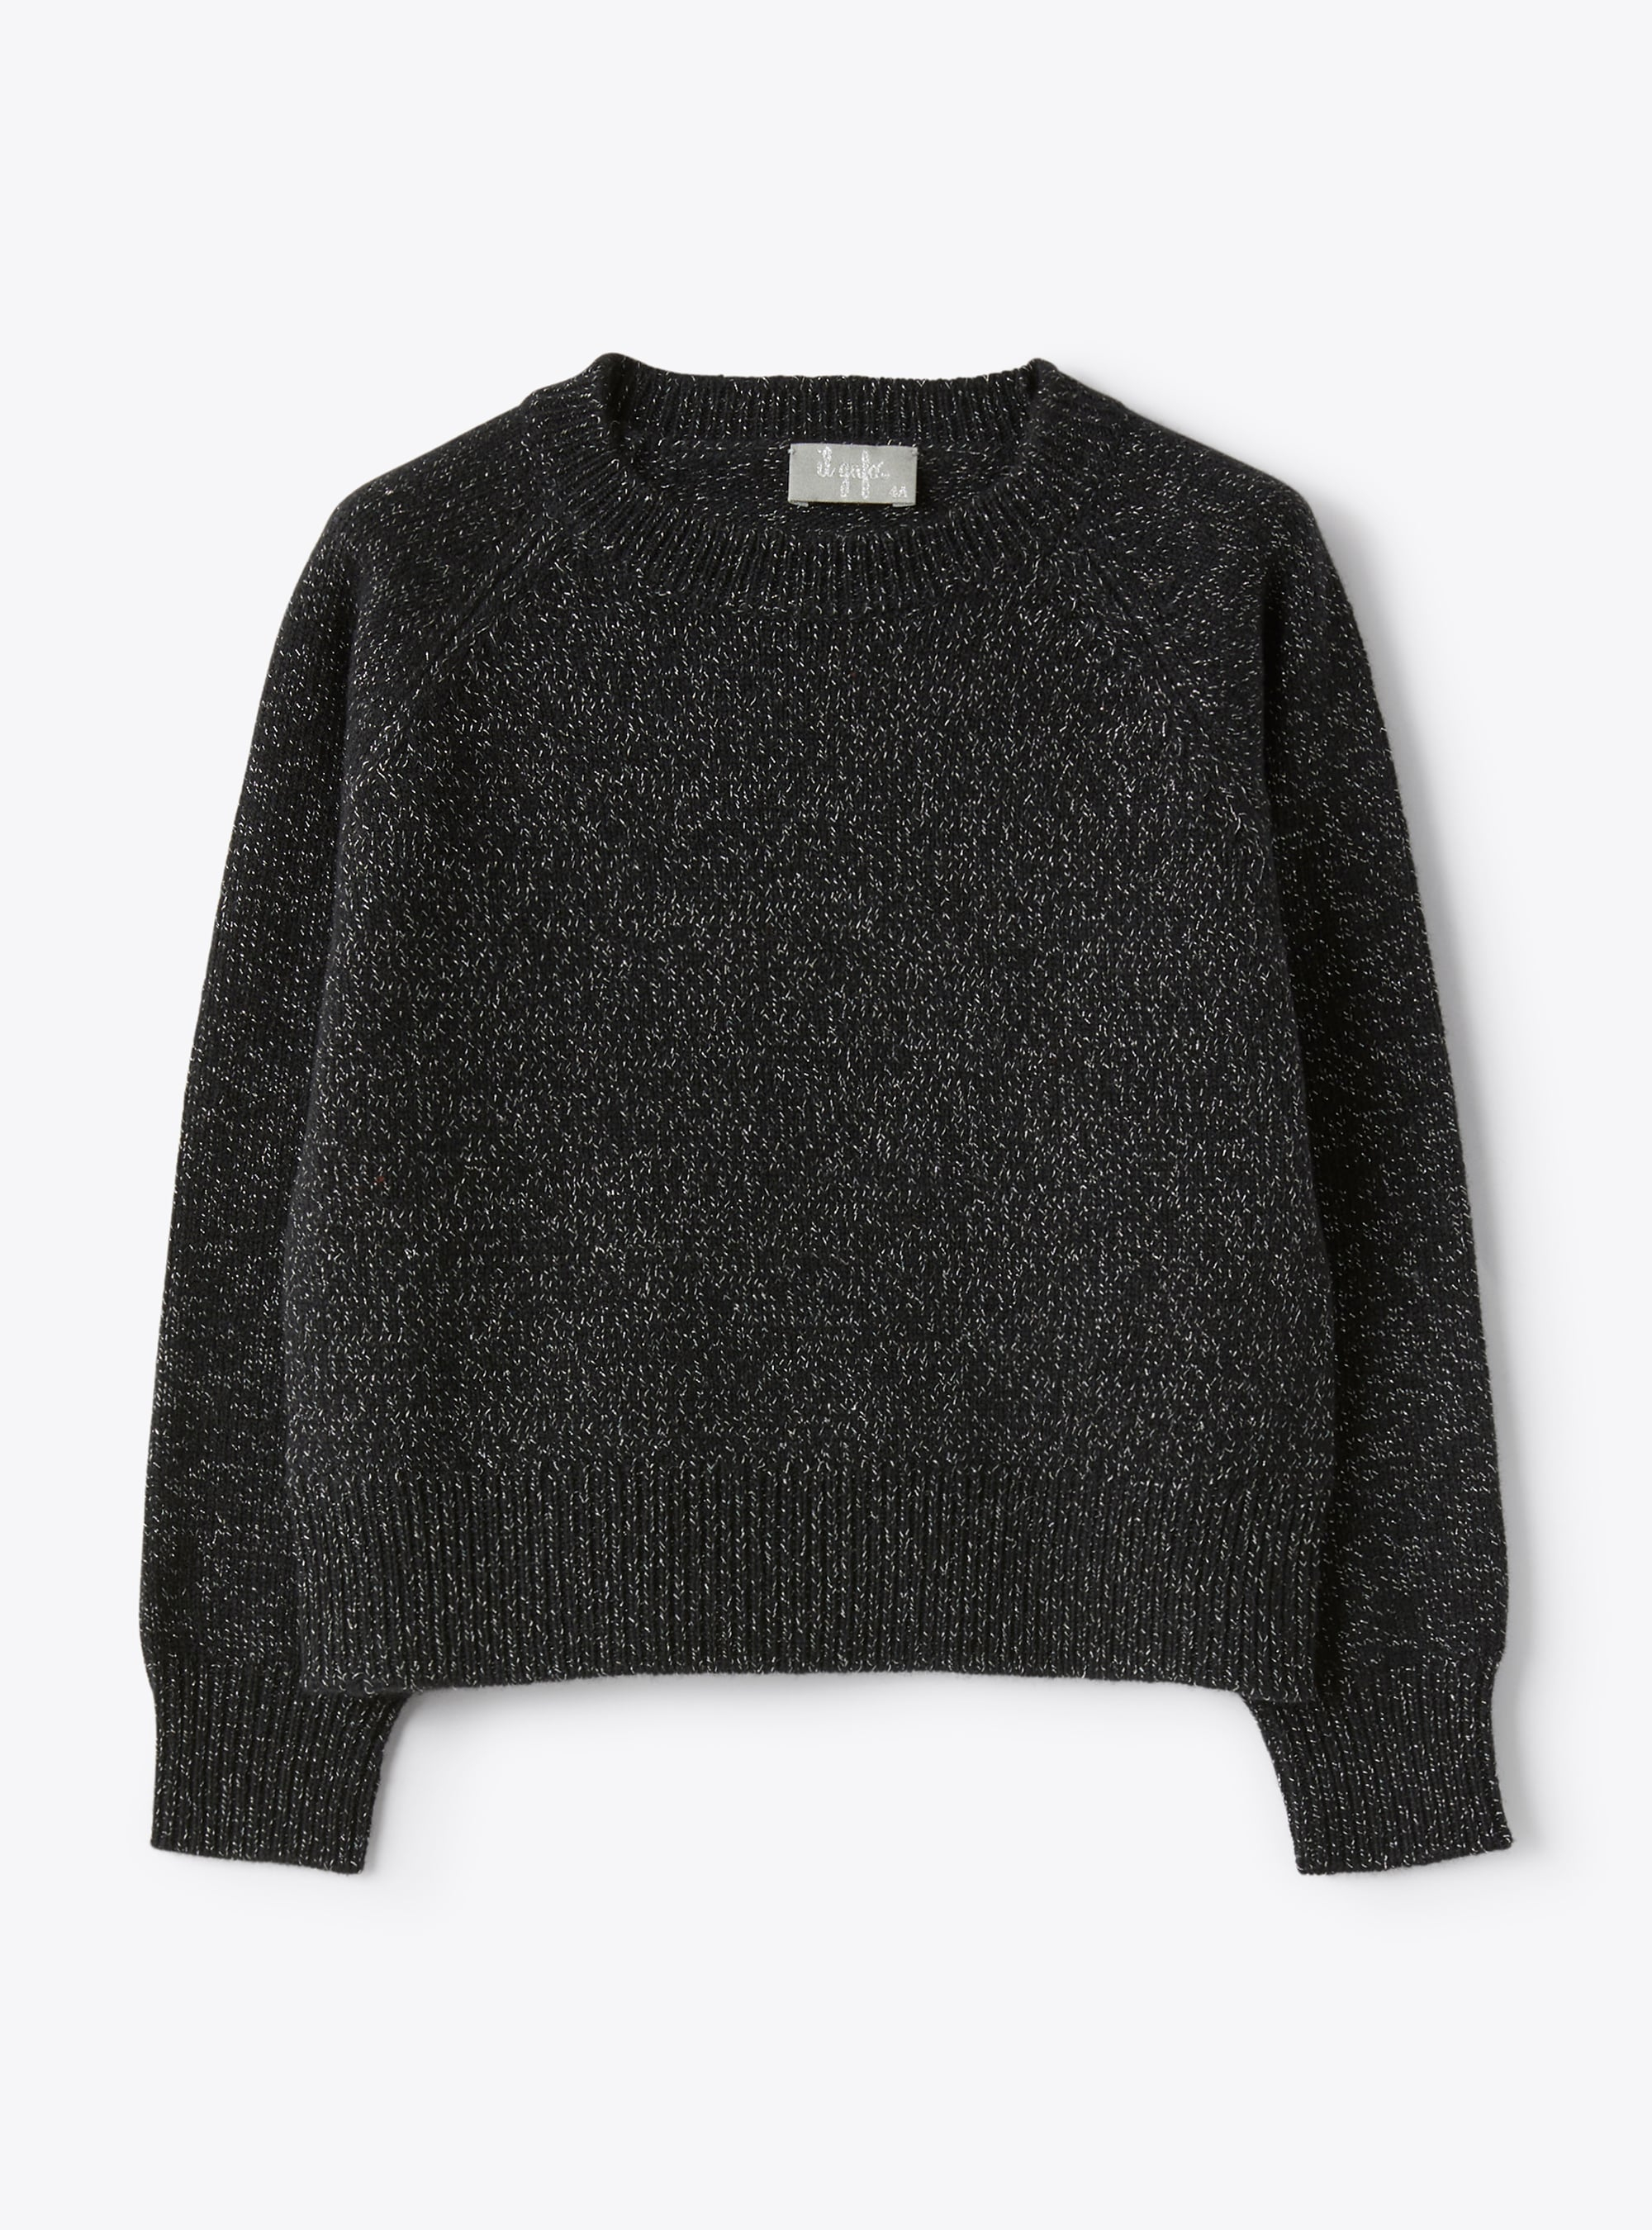 Round-neck sweater in black lurex - Sweaters - Il Gufo